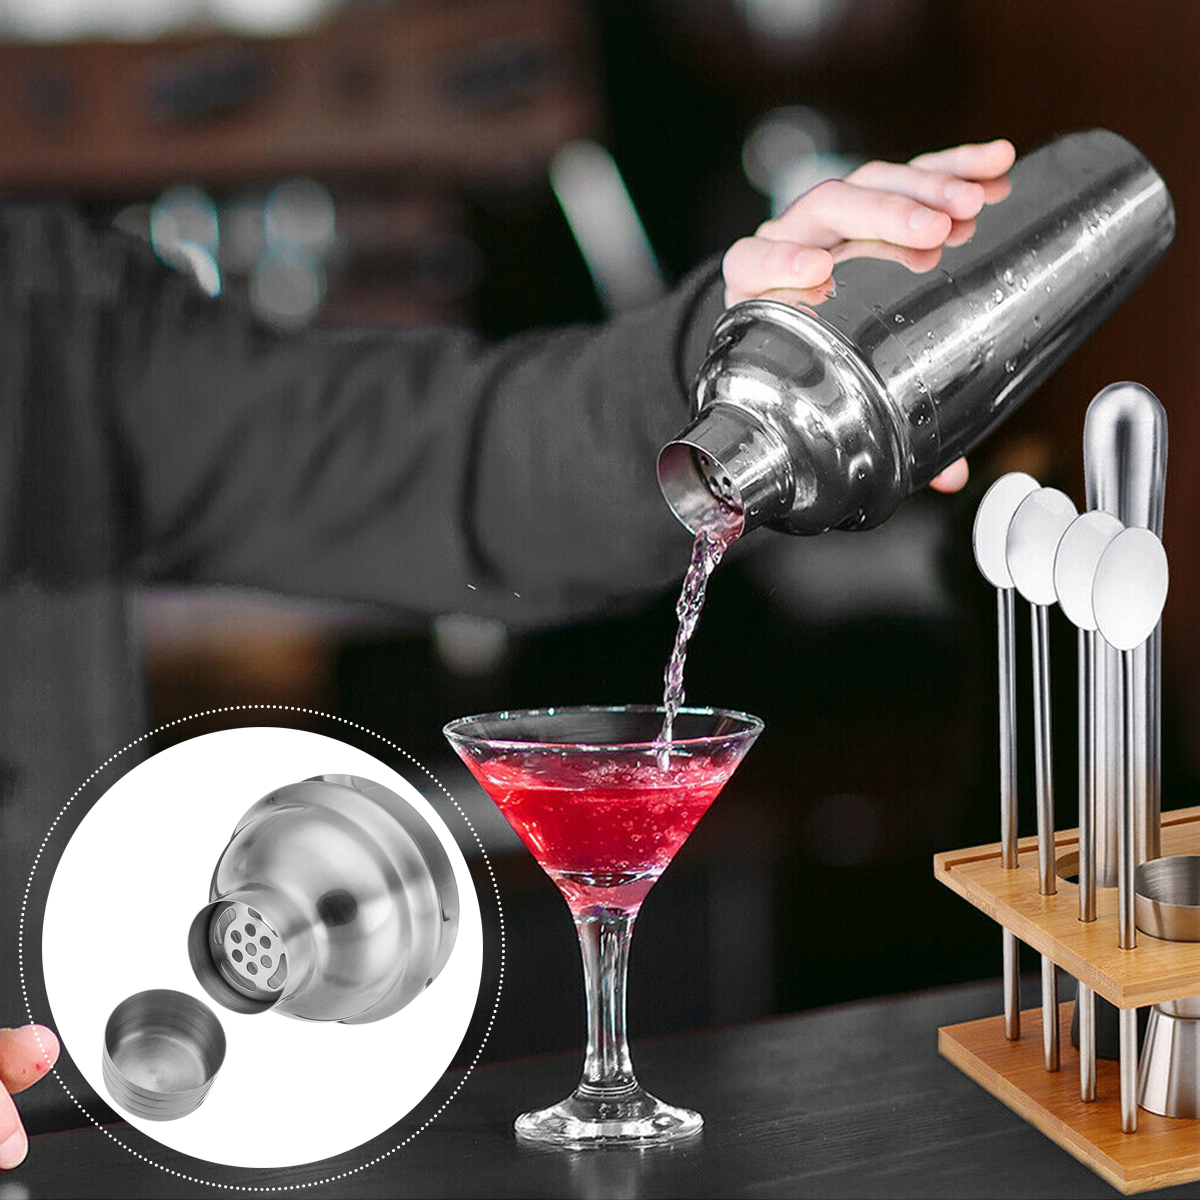 Cocktail-Maker-Set-Shaker-Mixer-Stainless-Steel-Bar-Bartender-Drink-Making-Kit-1730555-4